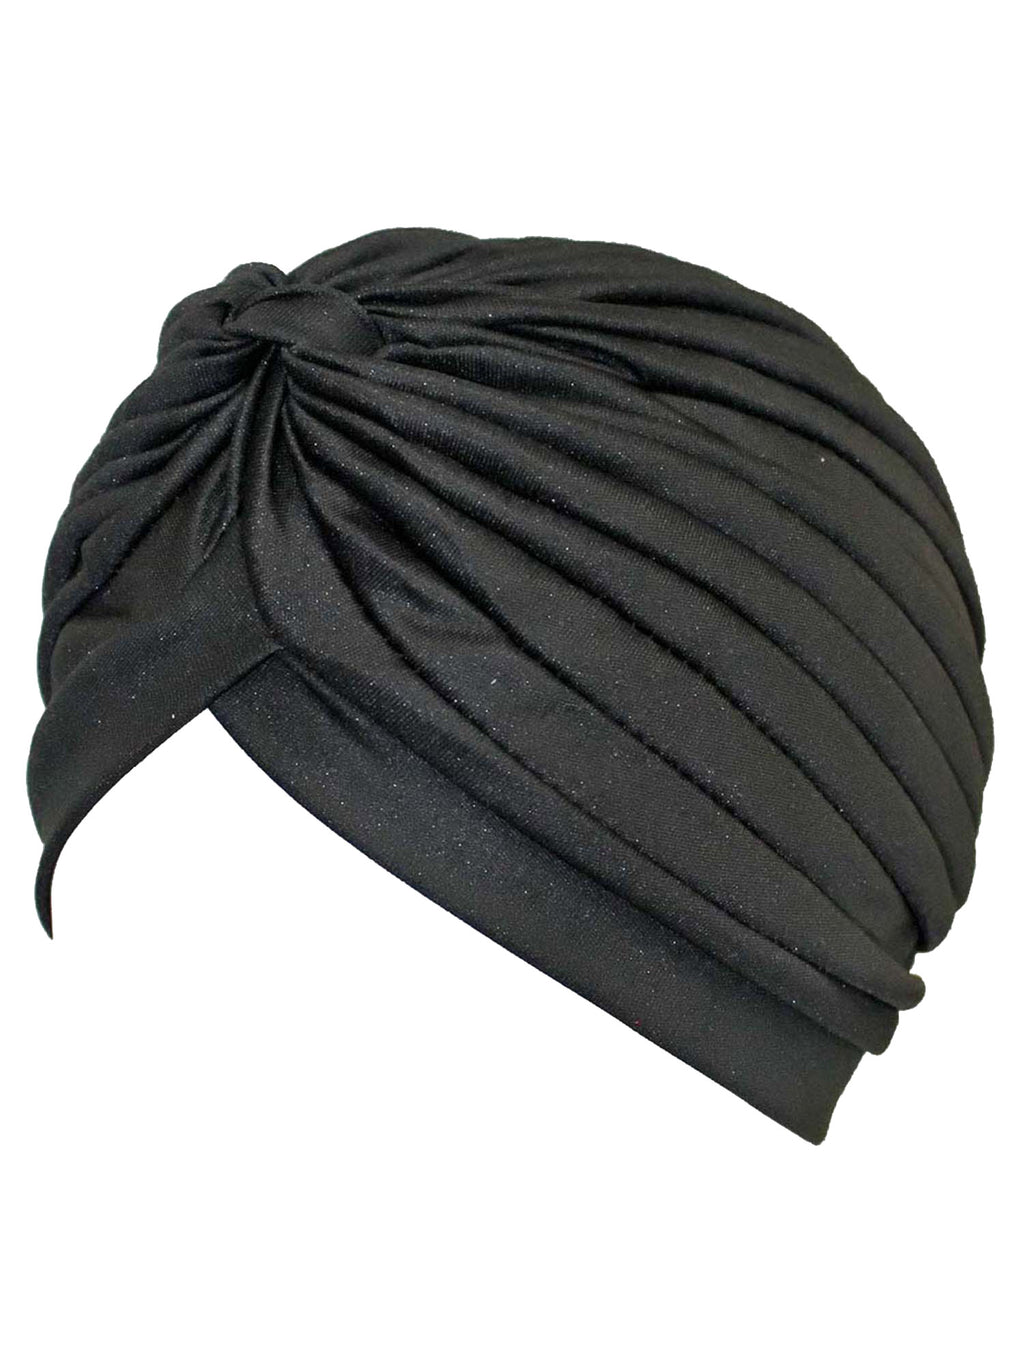 Turbans & Head Wraps for Women - Luxury Divas